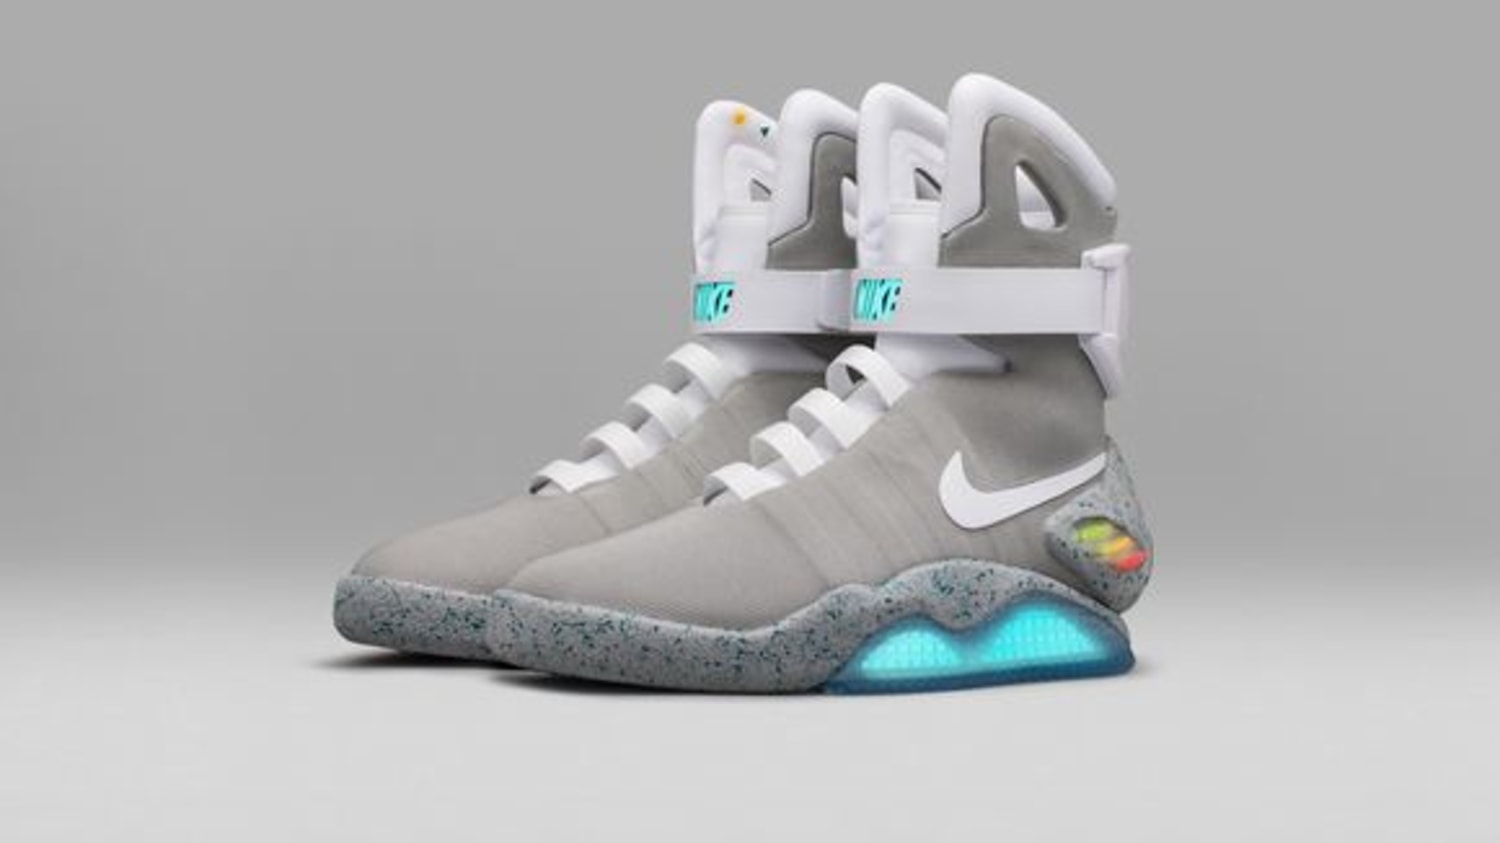 Nike Raffles 'Back the Future' Self-Tying Shoes